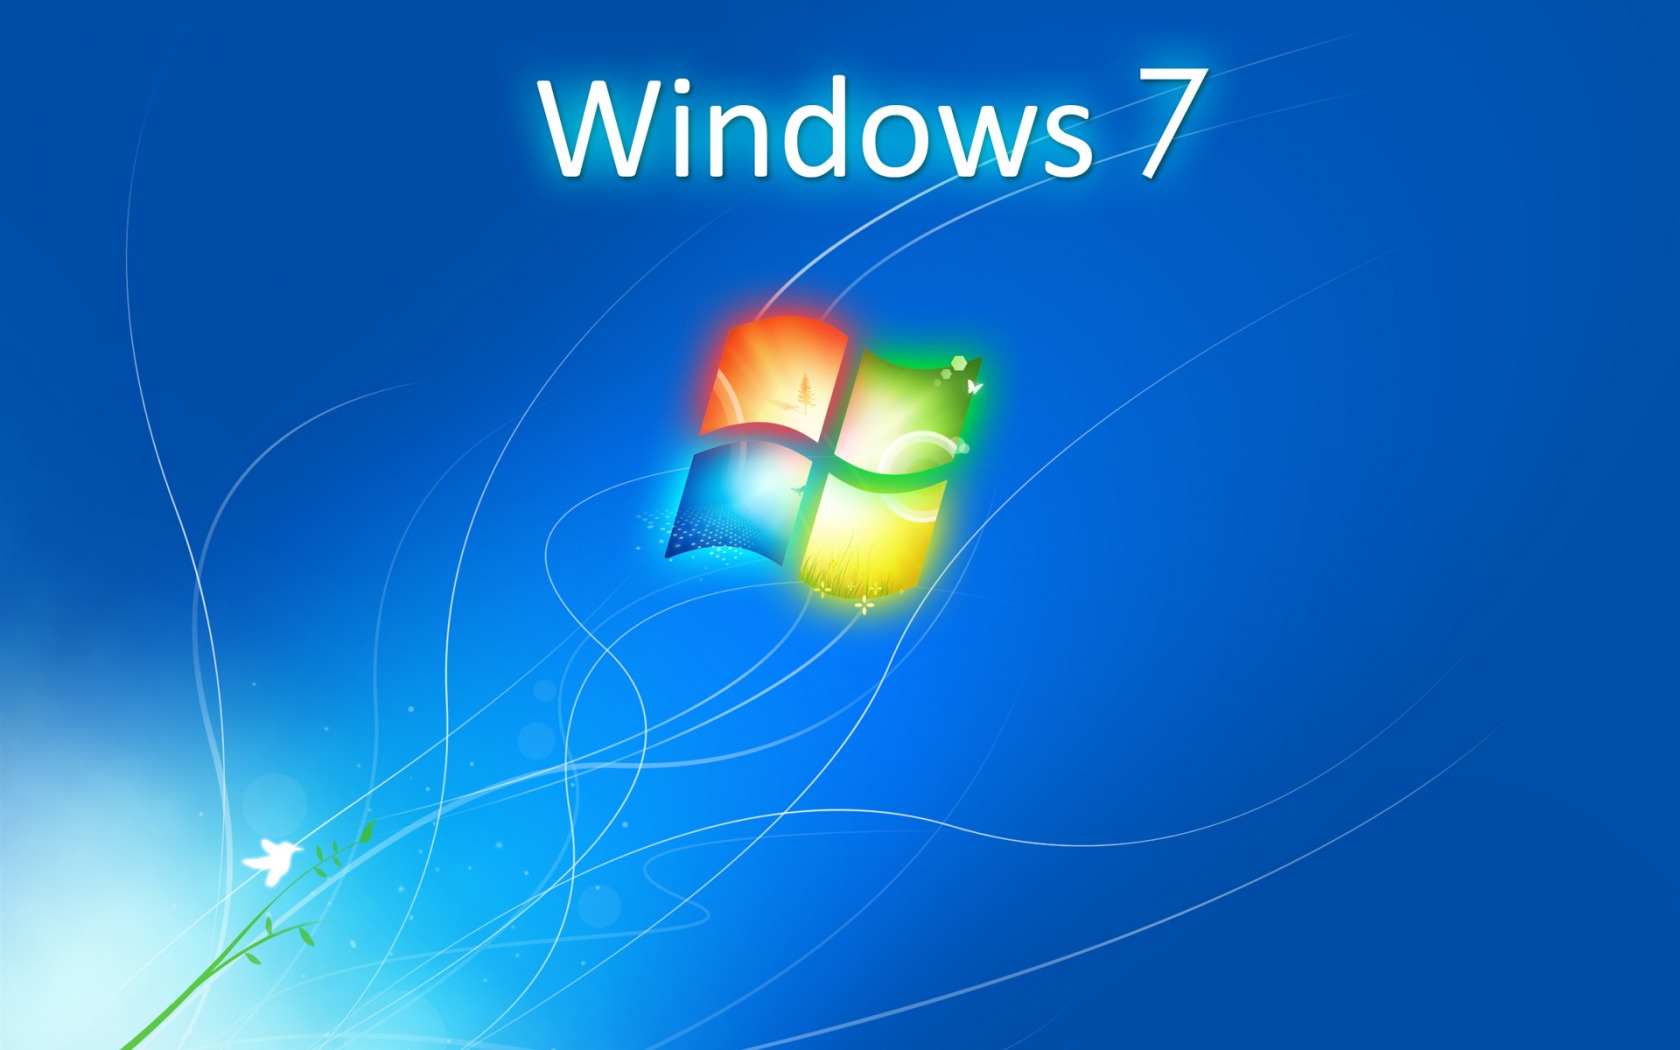 Windows 7 Wallpaper 4k - 1680x1050 Wallpaper 